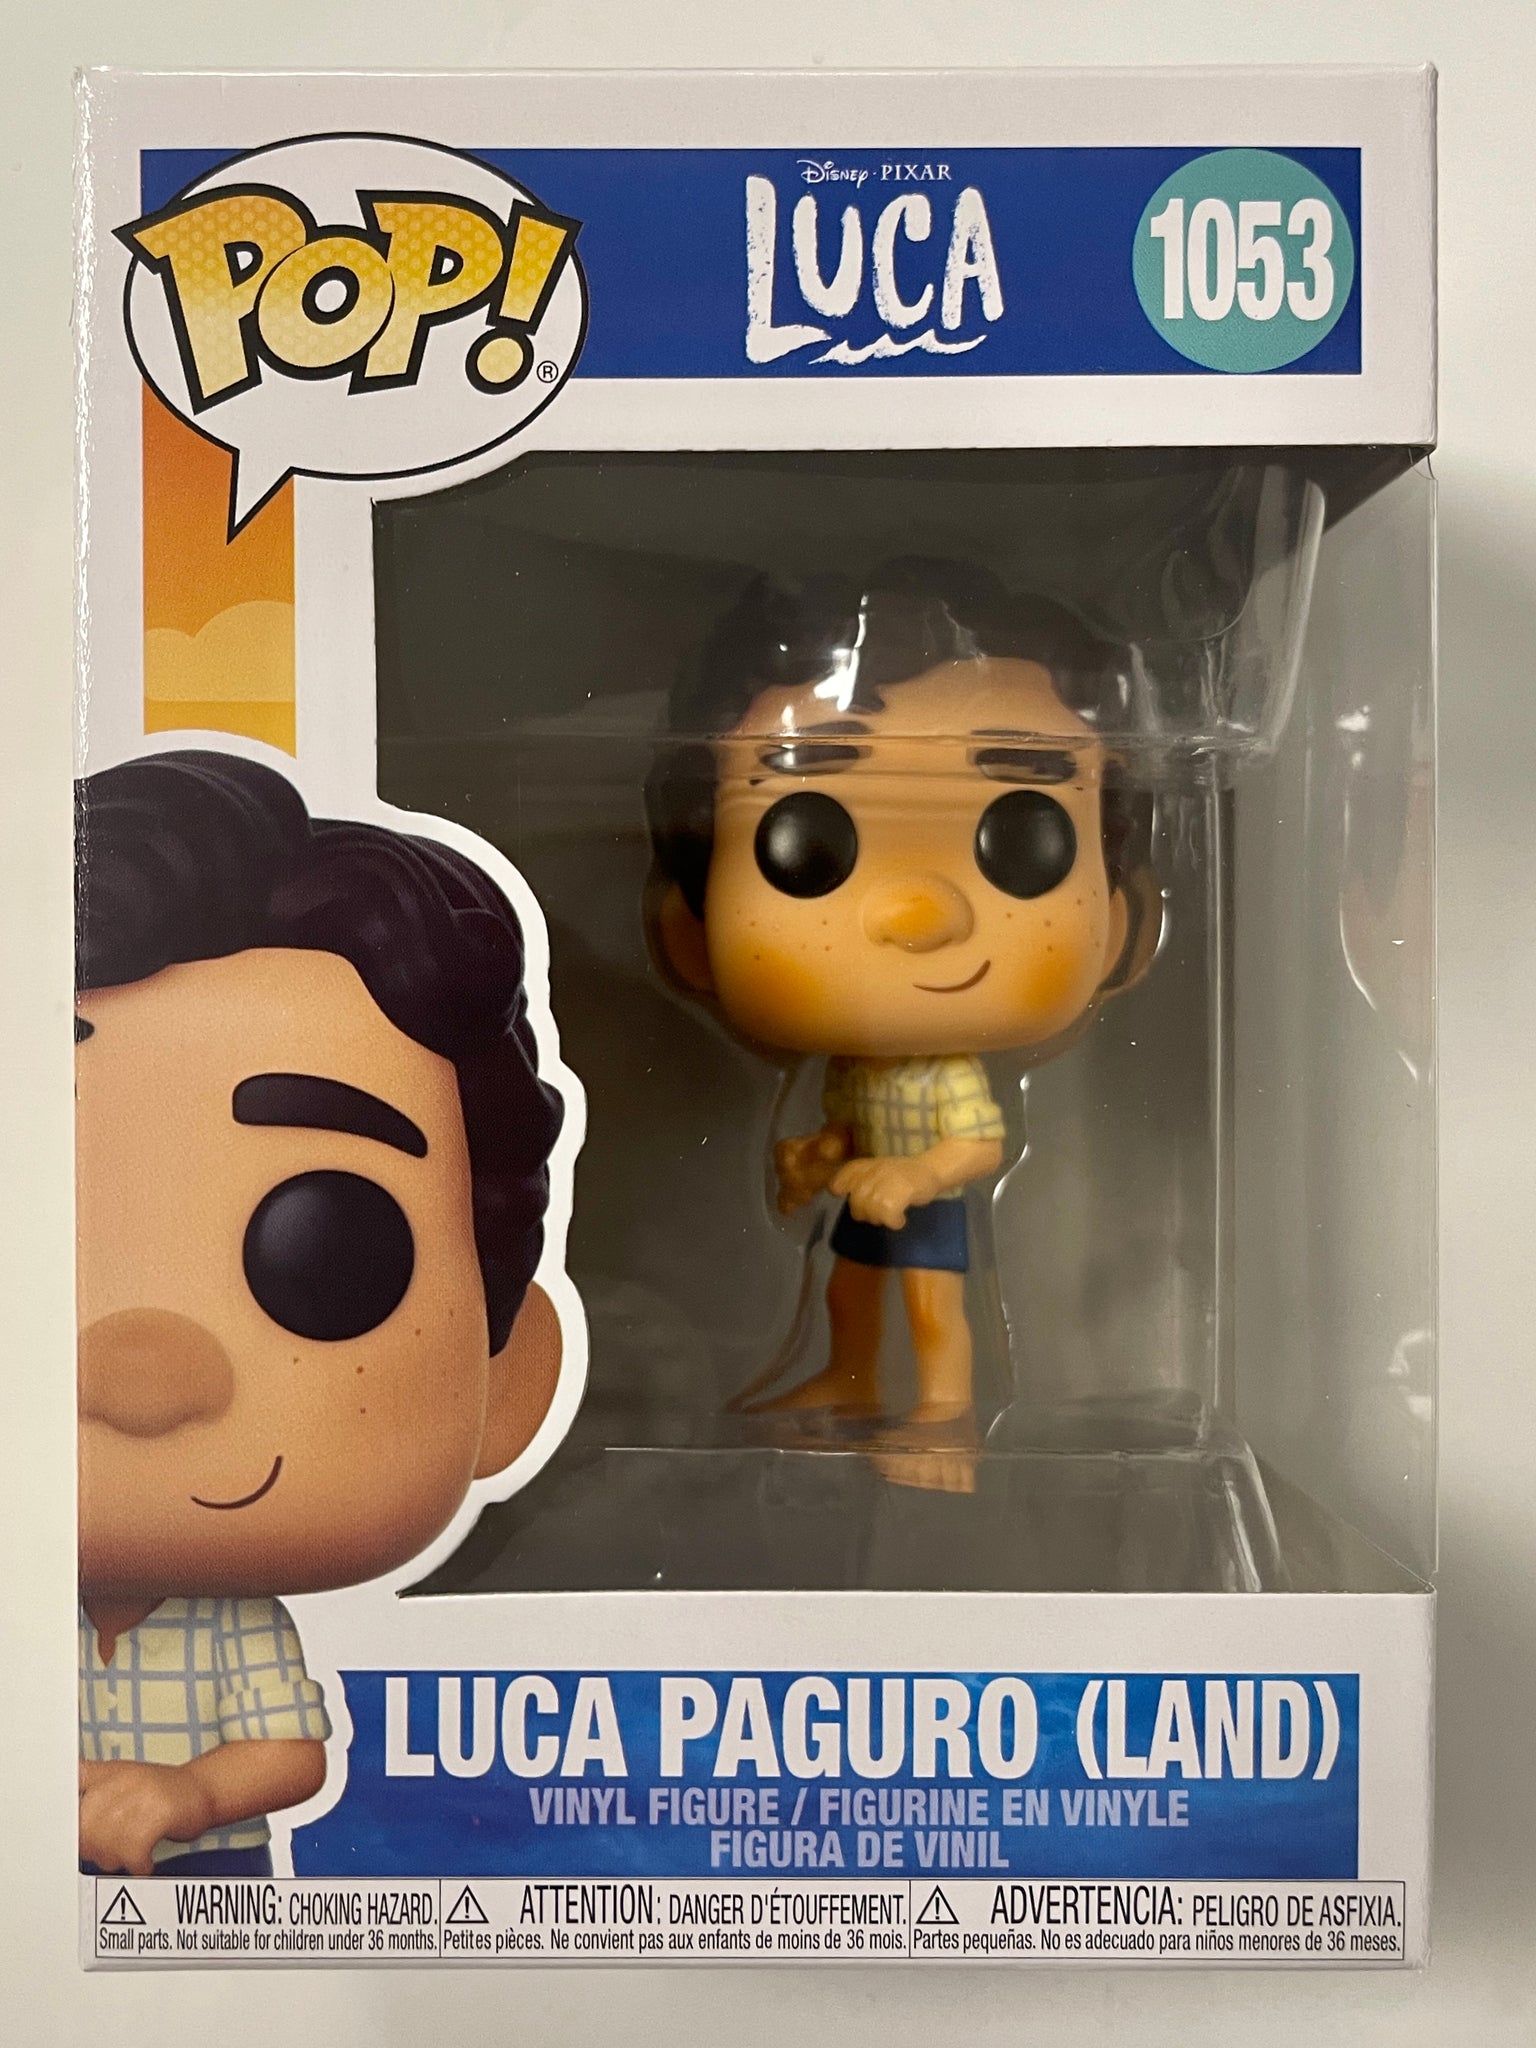 Disney Pixar Luca Paguro Figure